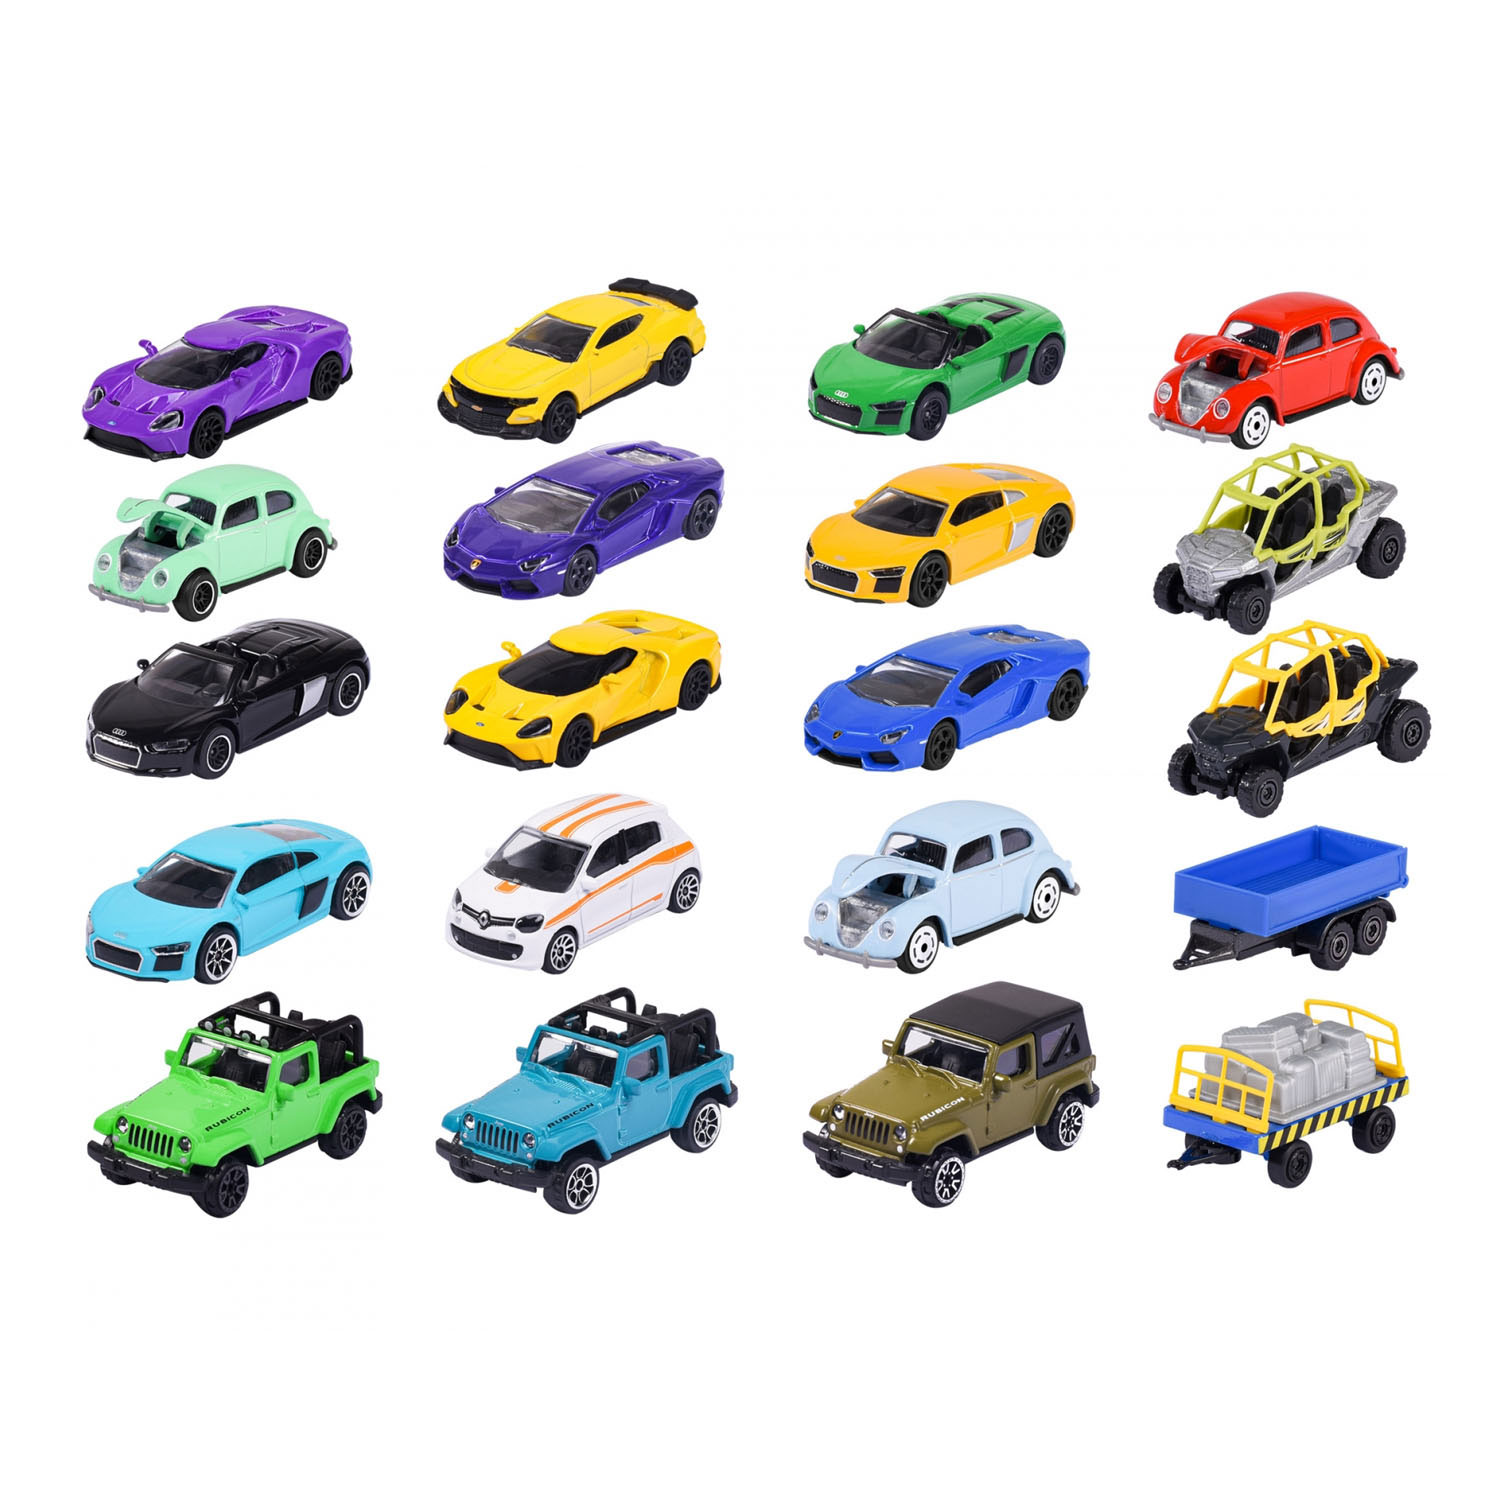 rijk Scheur Zeep Majorette Toy Cars Giftpack, 20pcs. | Thimble Toys